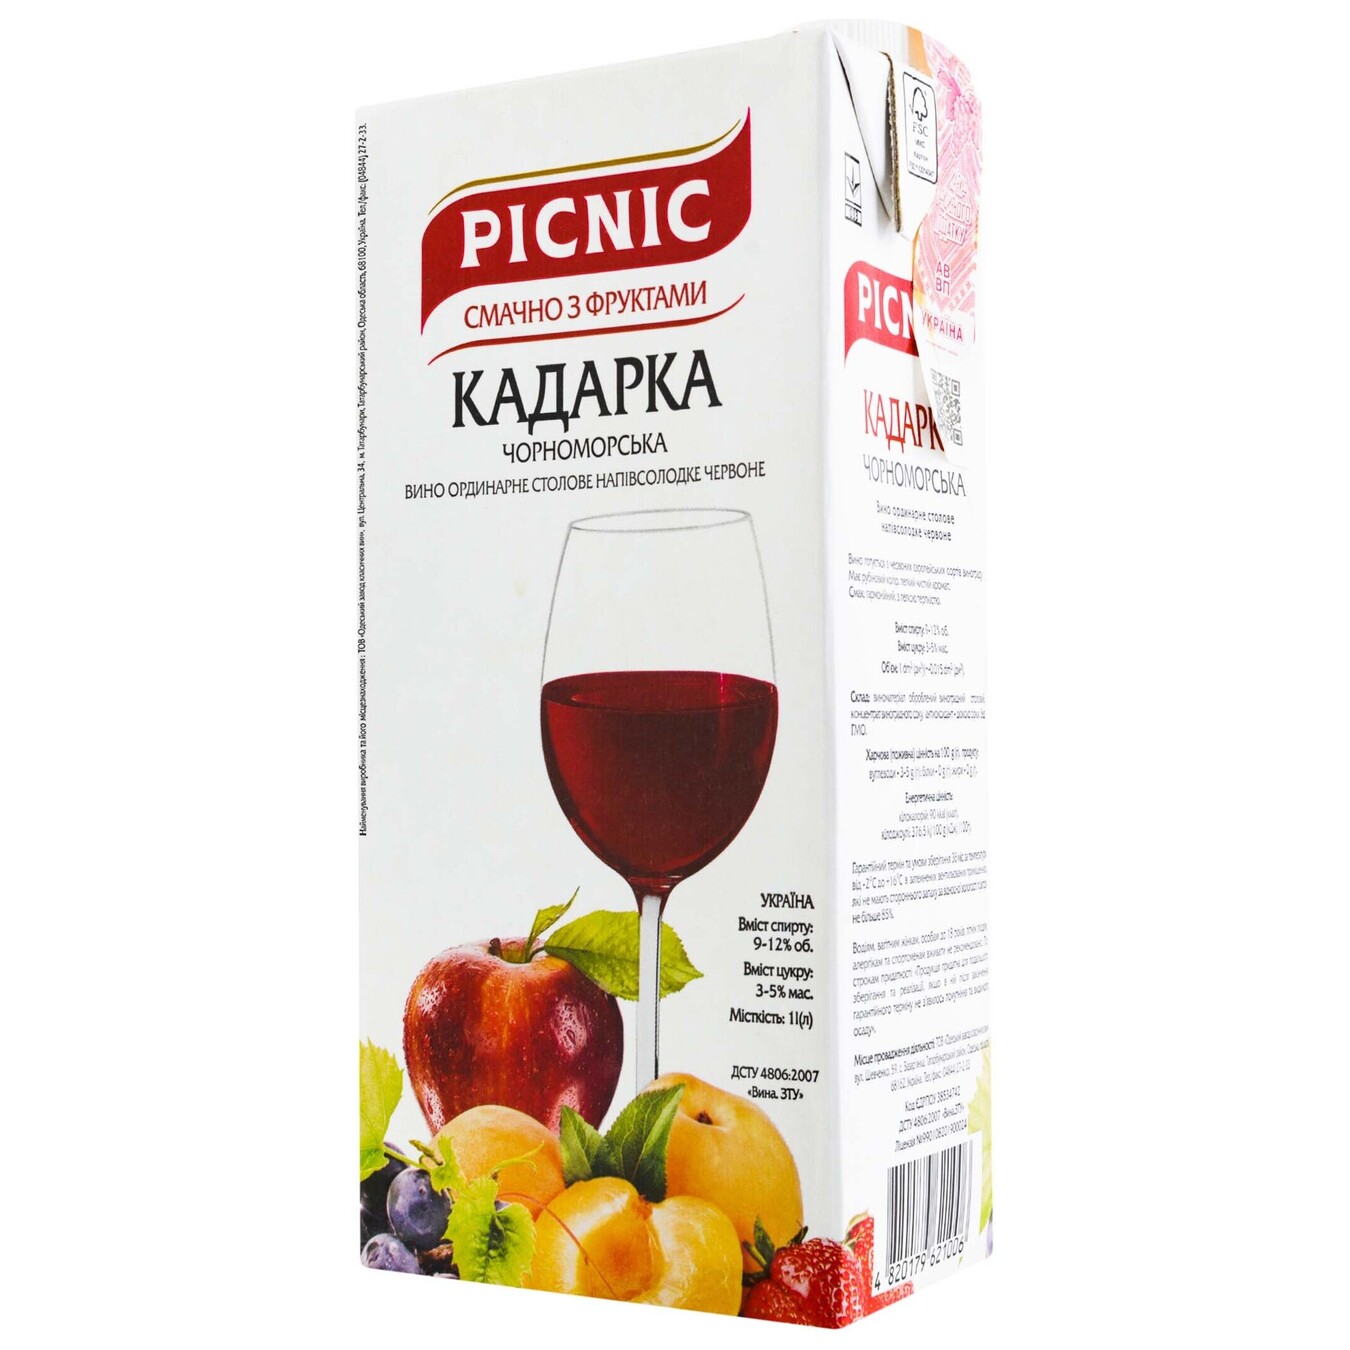 Picnic Kadarka chornomorska Wine red semi-sweet 12% 1l 2